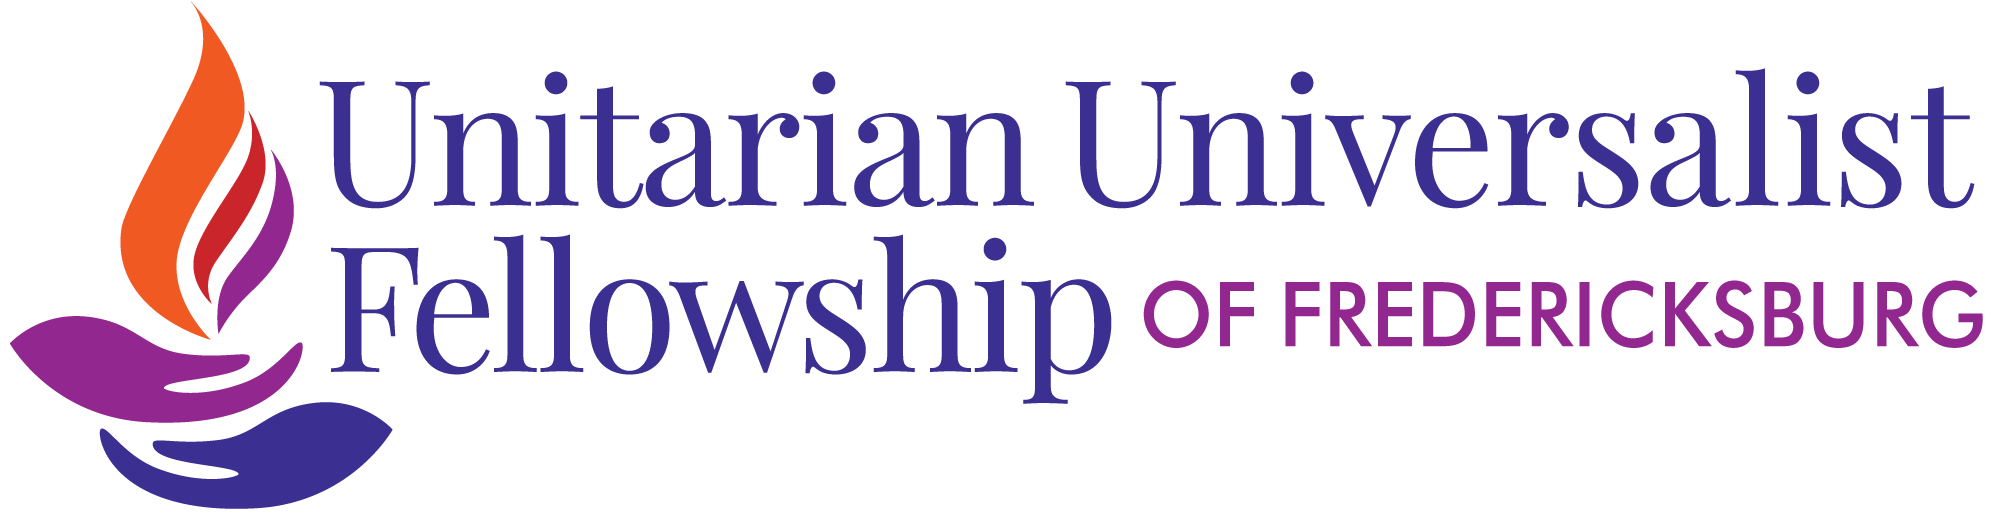 Unitarian Universalist Fellowship of Fredericksburg